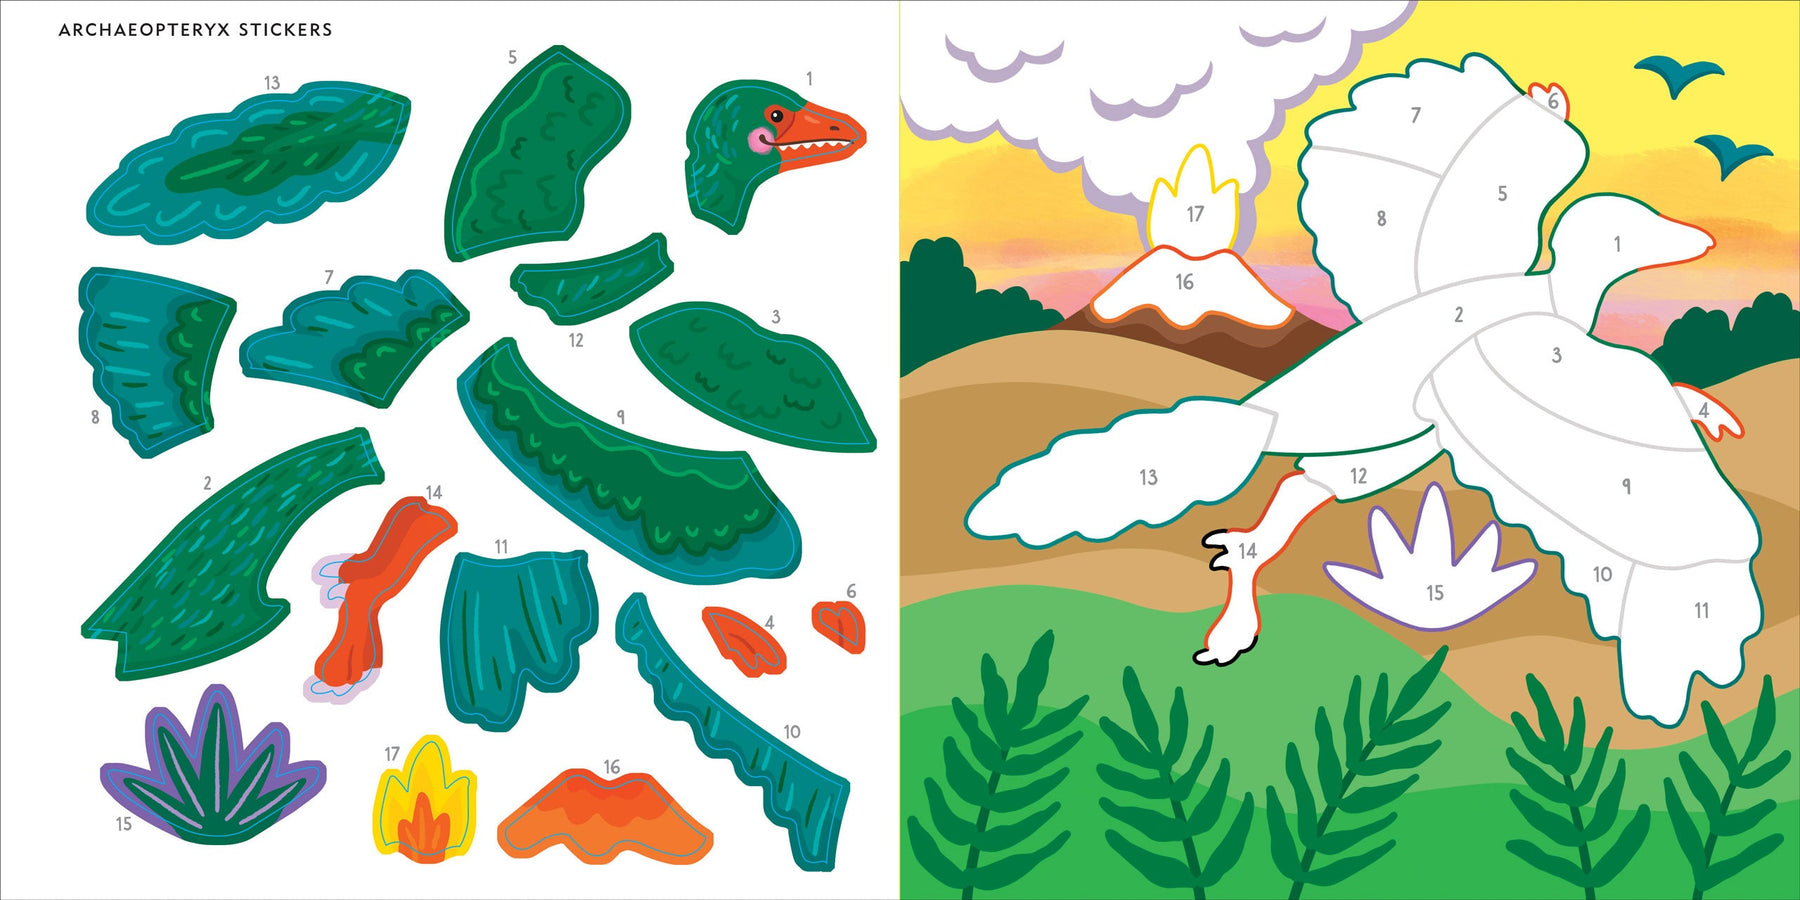 Dinosaur Colouring Book for Kids — Maple Press